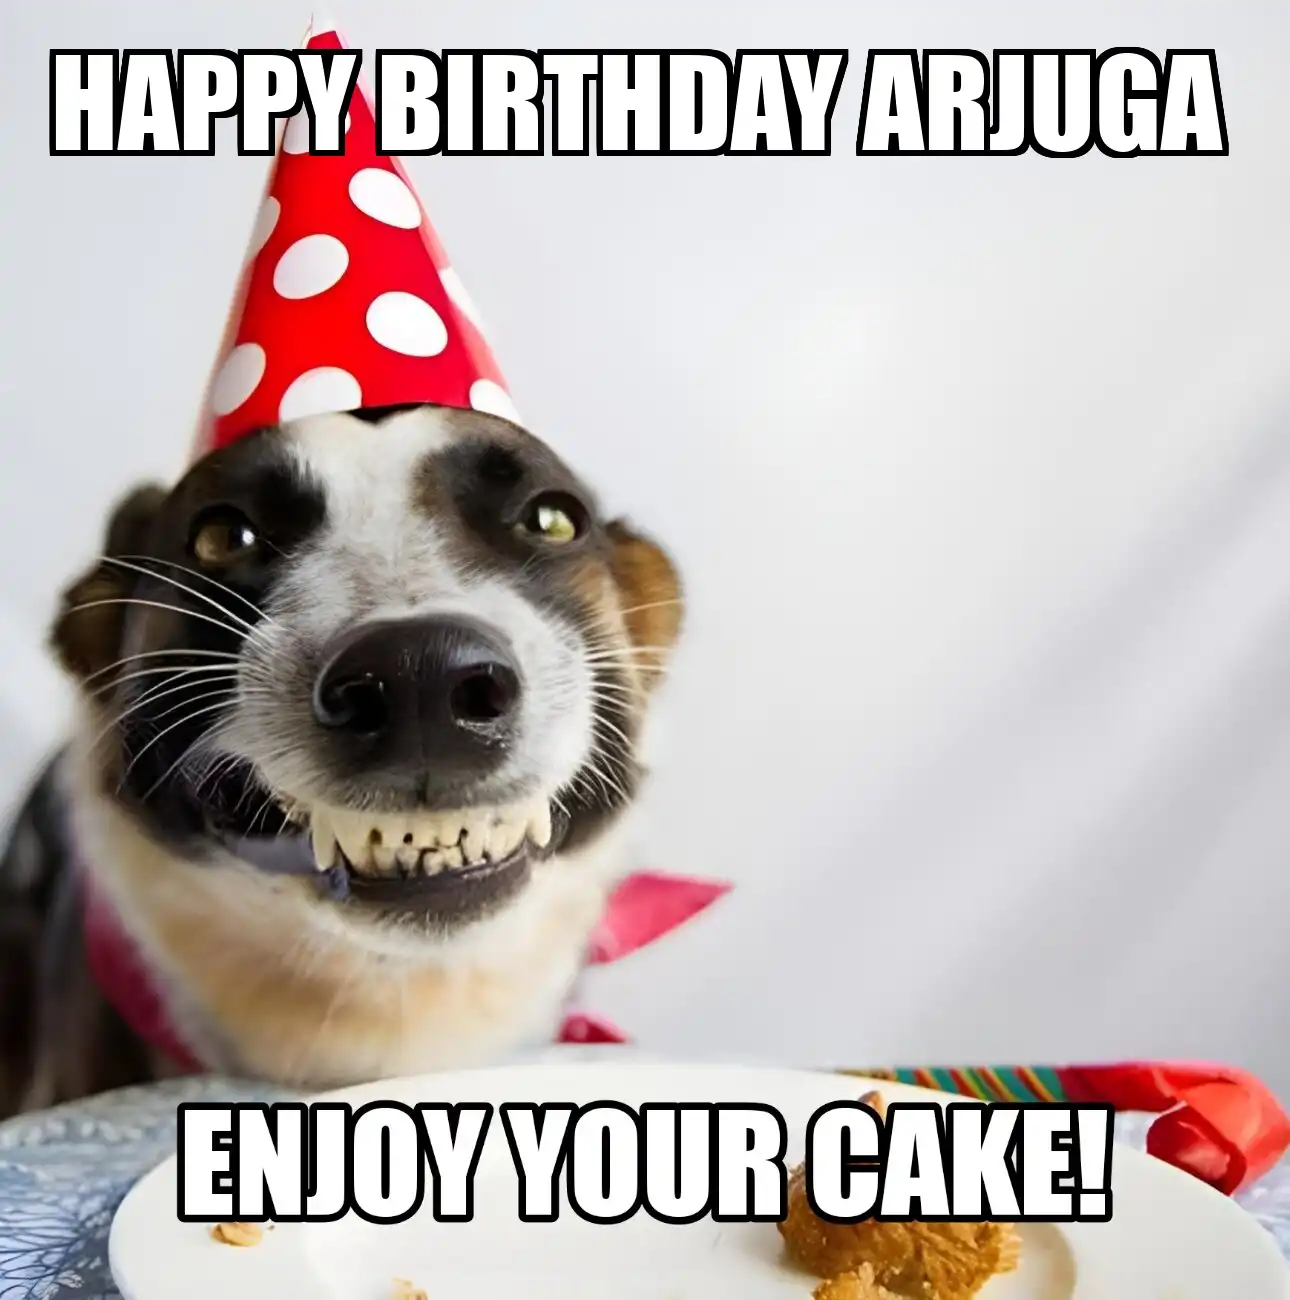 Happy Birthday Arjuga Enjoy Your Cake Dog Meme